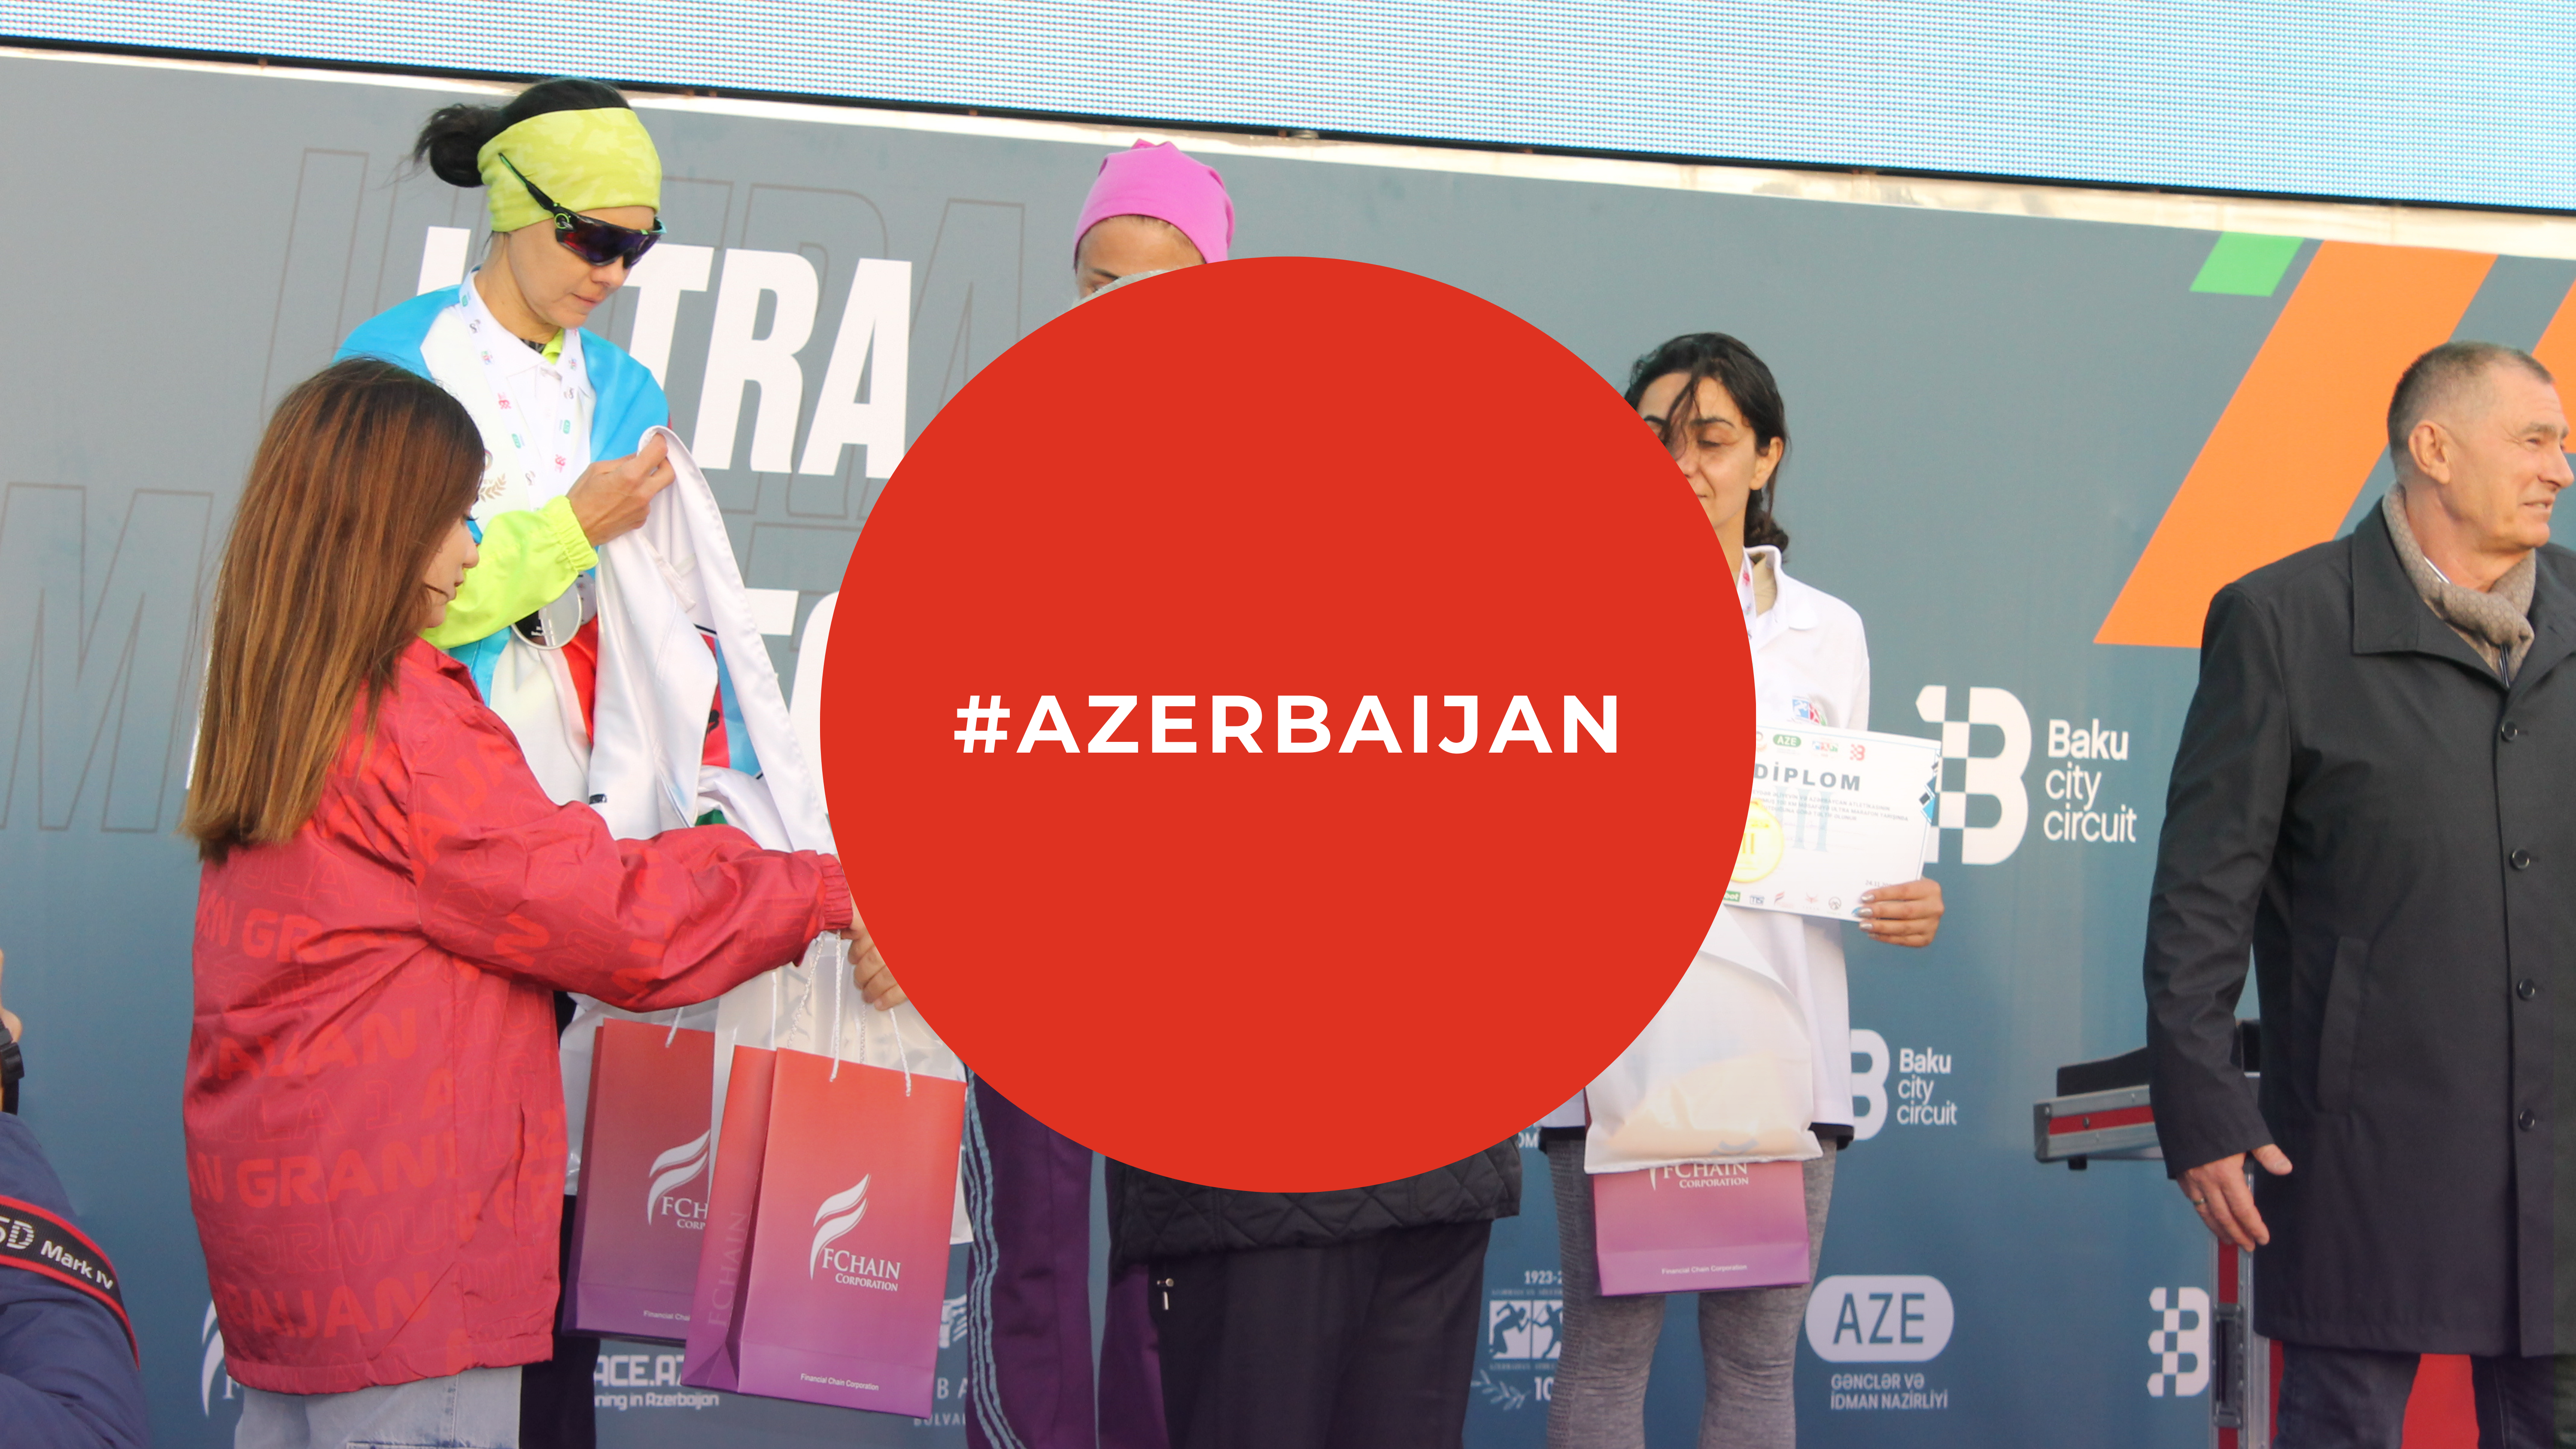 FCHAIN Corporation Champions a Healthy Future: Supporting Azerbaijan’s First 100 km Ultramarathon